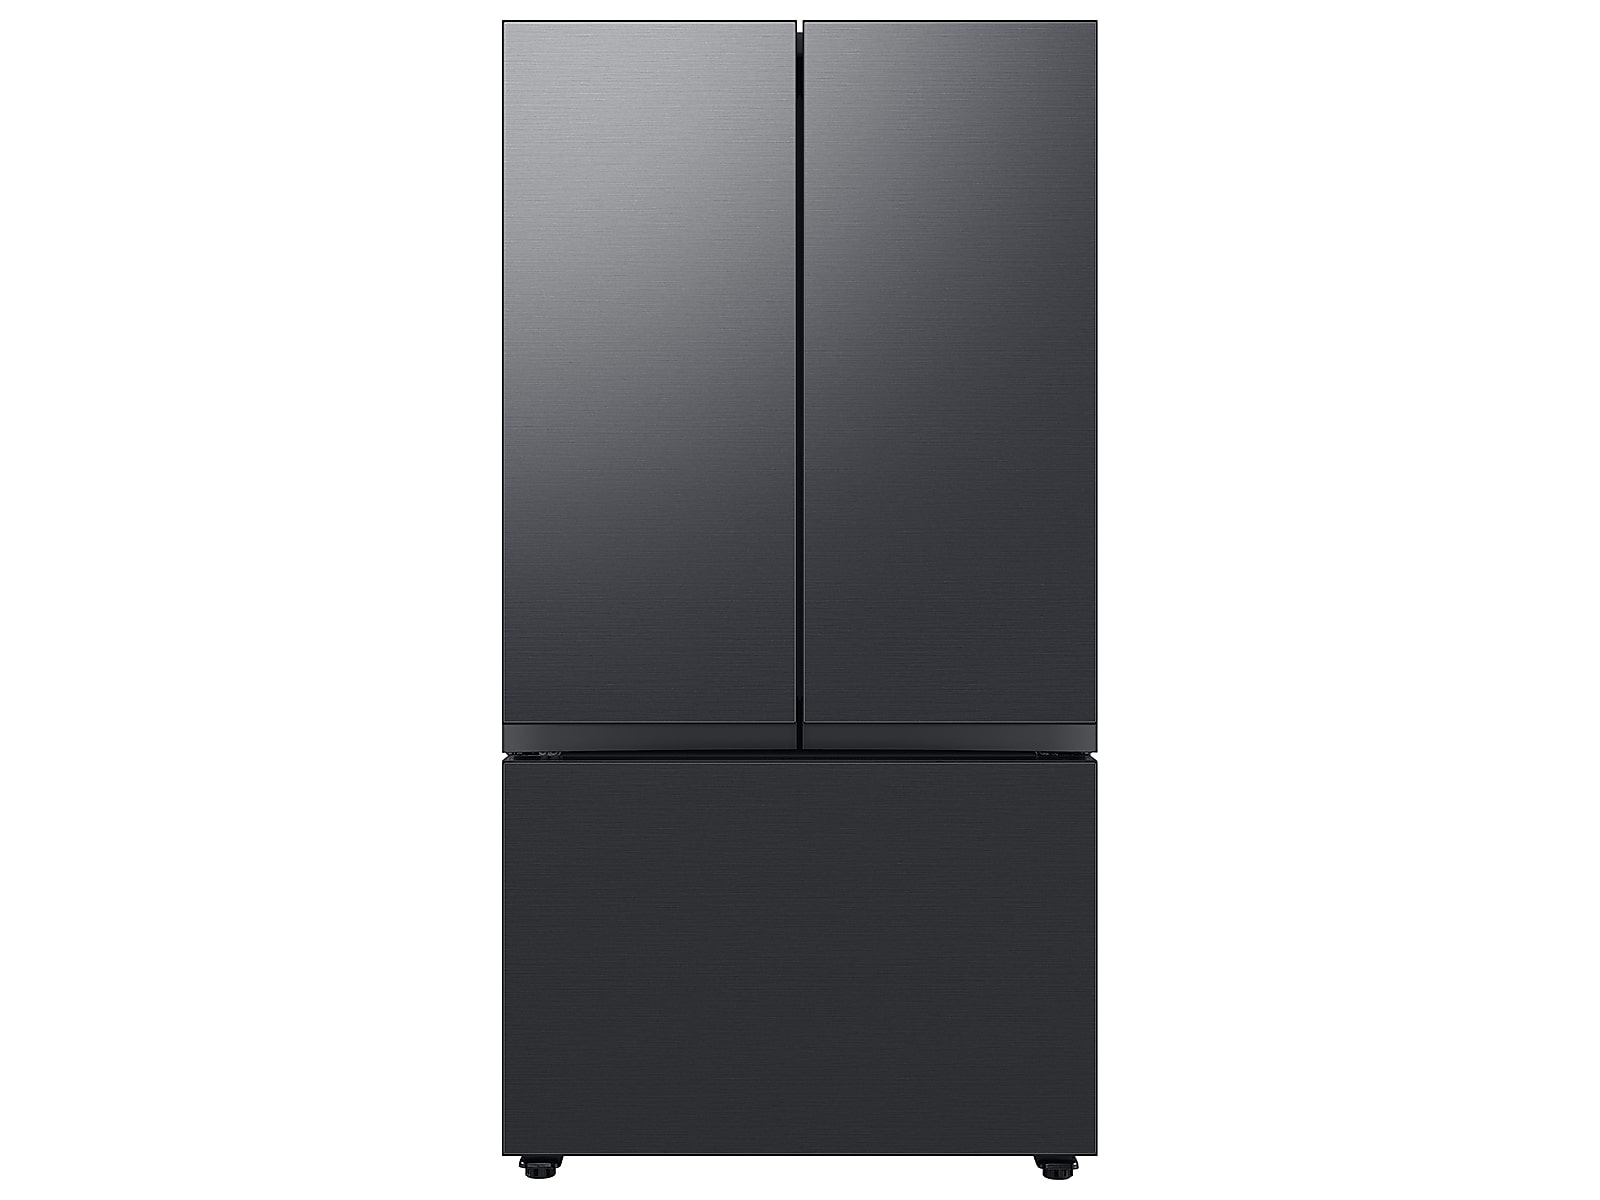 Samsung Bespoke 3-Door French Door Refrigerator in Stainless Steel (30 cu. ft.) with Beverage Center™ in Matte Black Steel(BNDL-1650310916576)